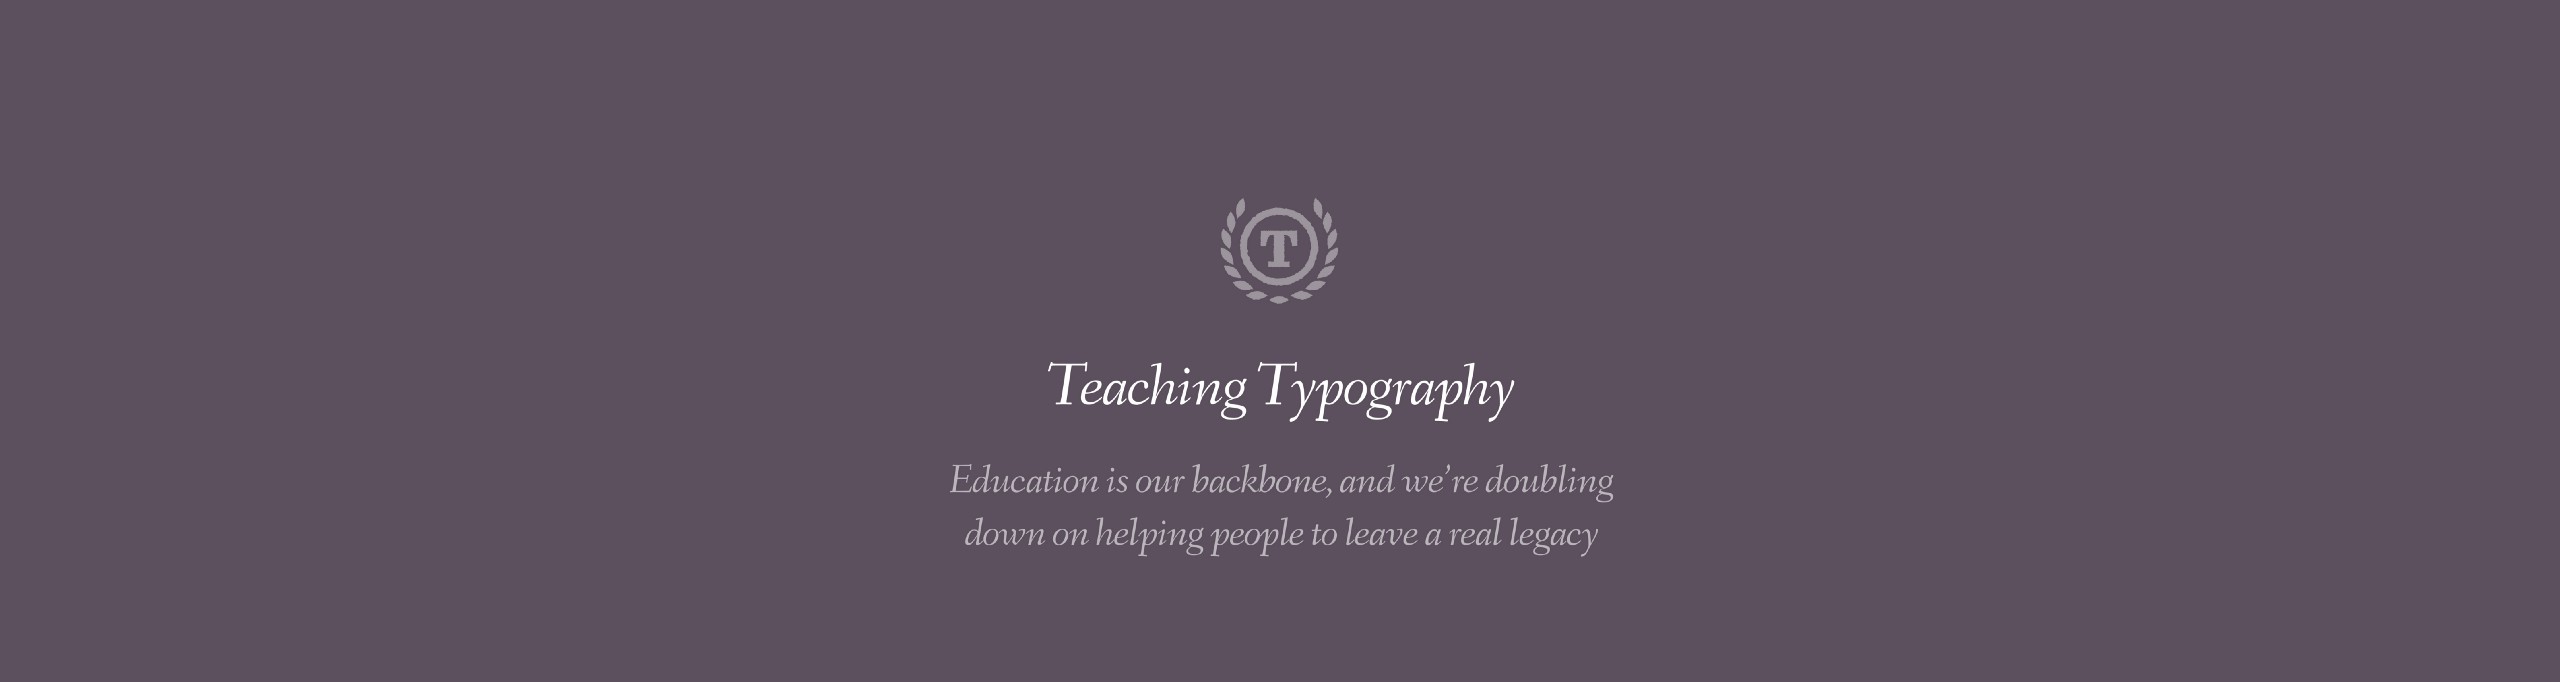 Teaching Typography